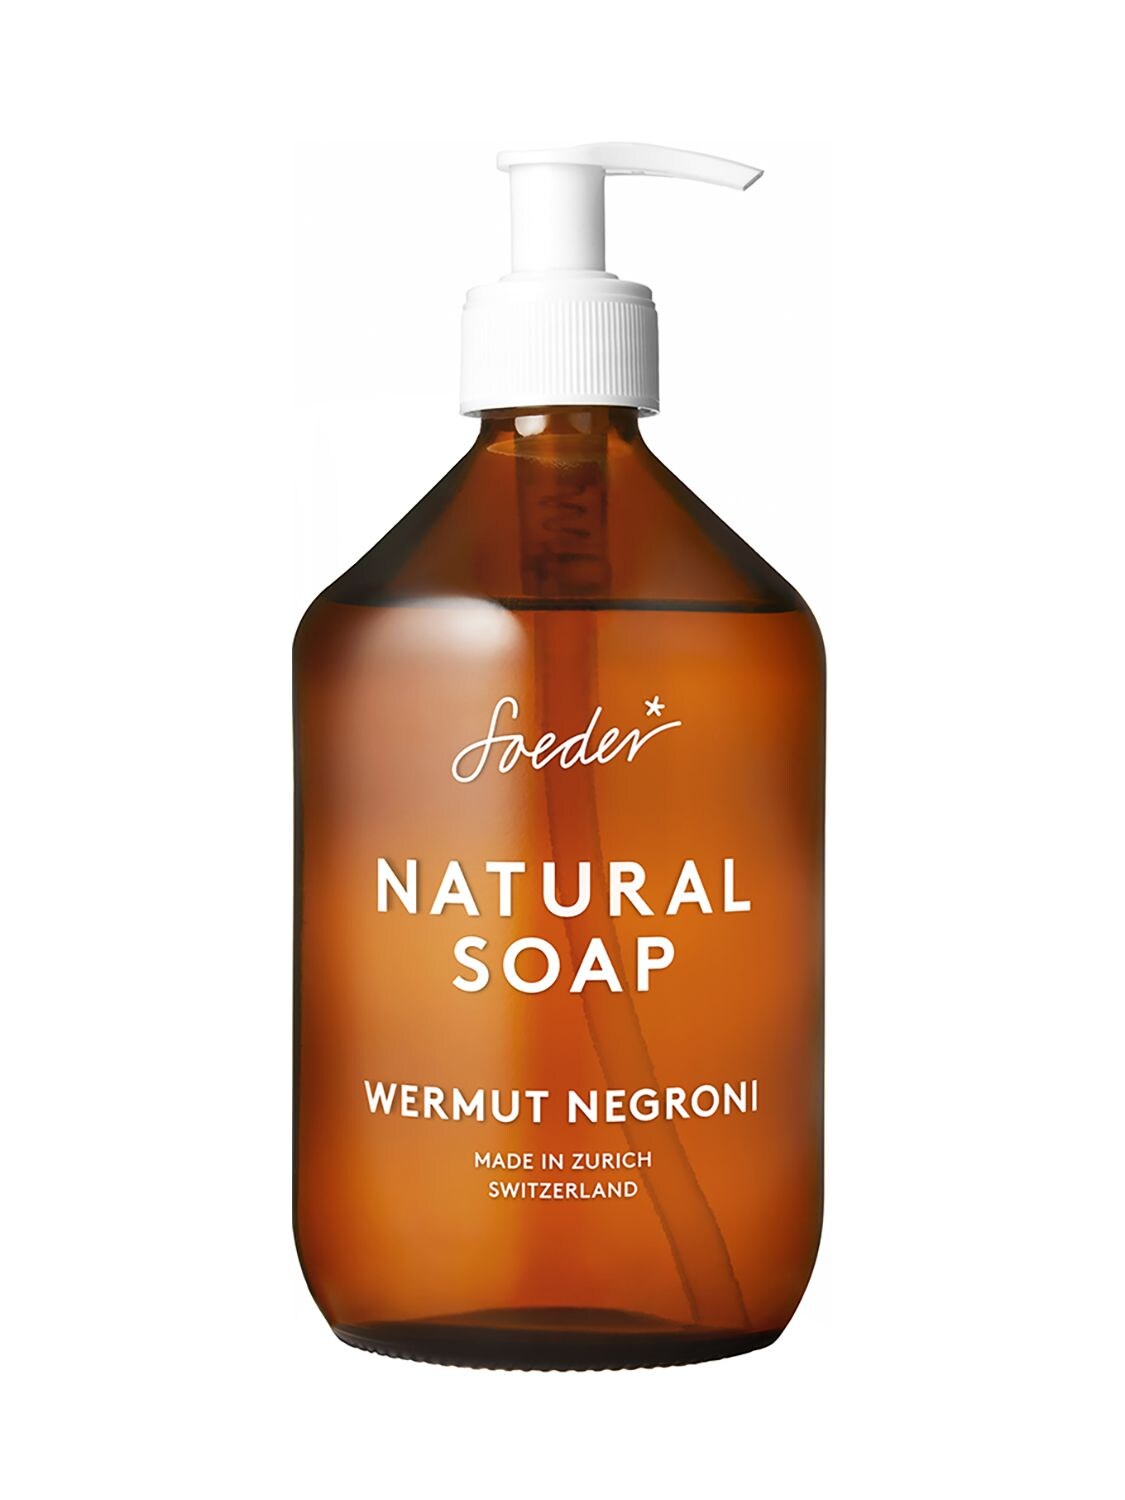 500ml Wermut Negroni Natural Soap – BEAUTY – WOMEN > BATH & BODY > BODY WASH & SOAP